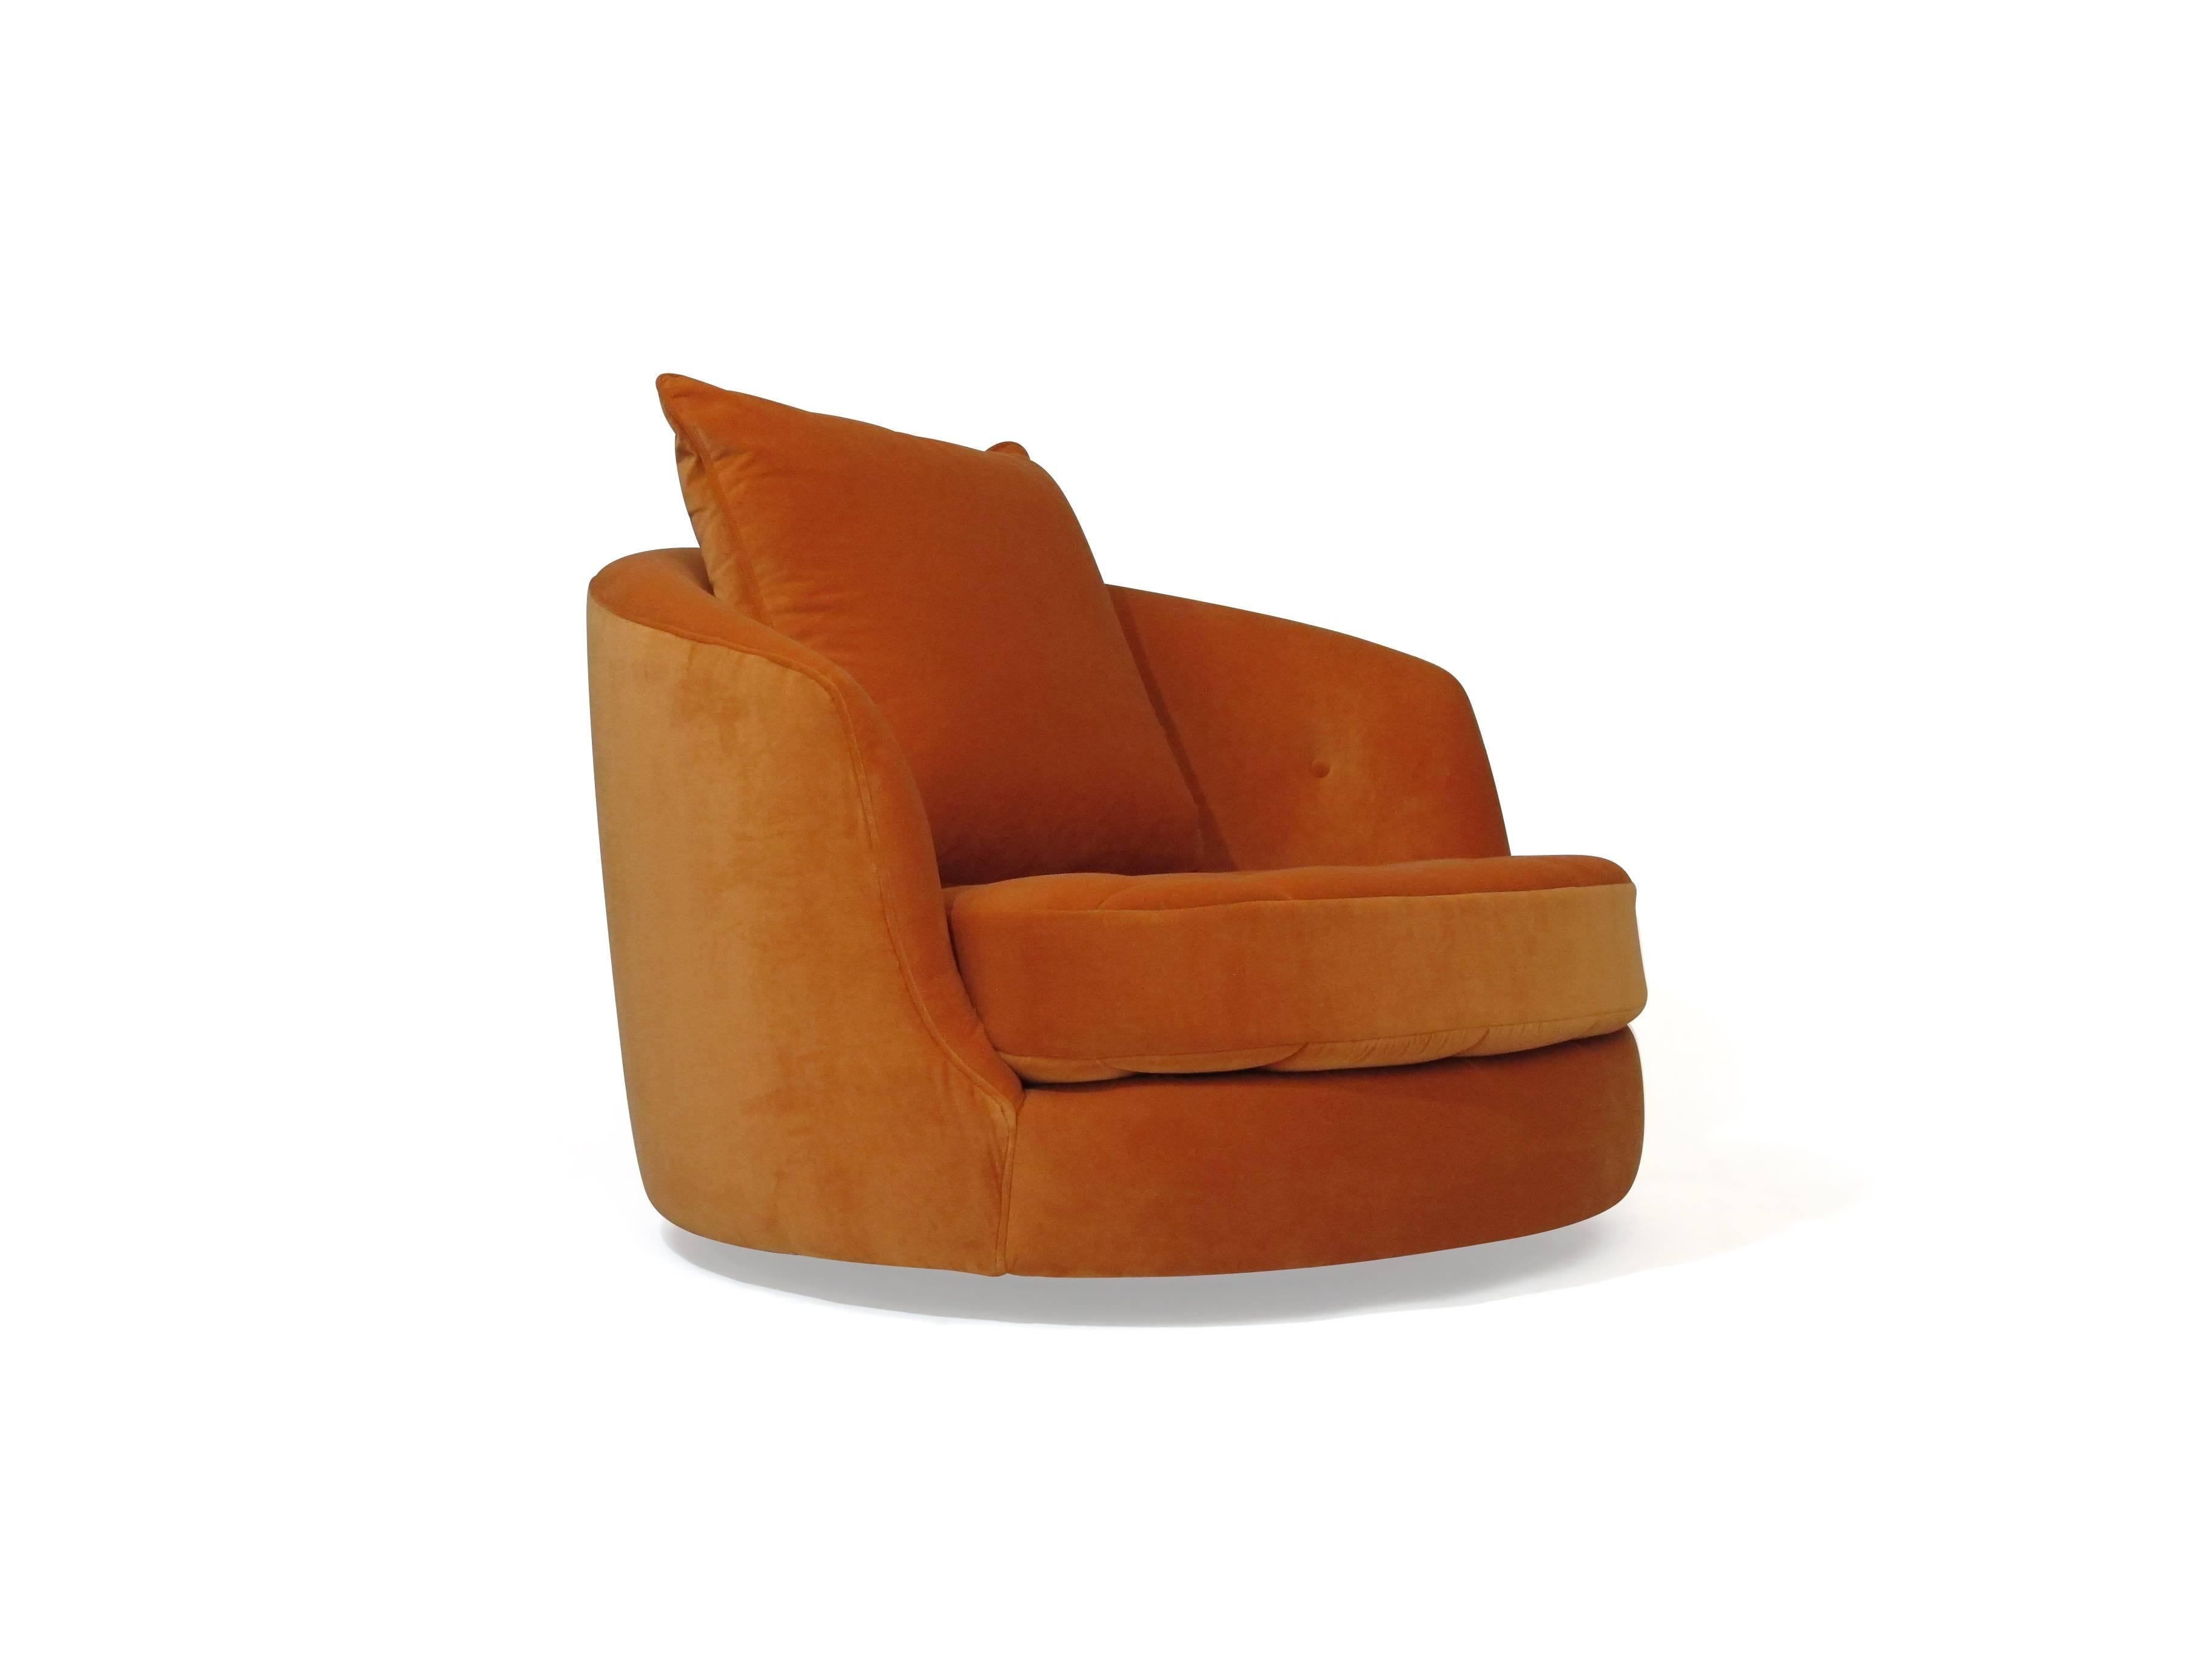 Contemporary Milo Baughman for Thayer Coggin Swivel Tub Chair Available in COM